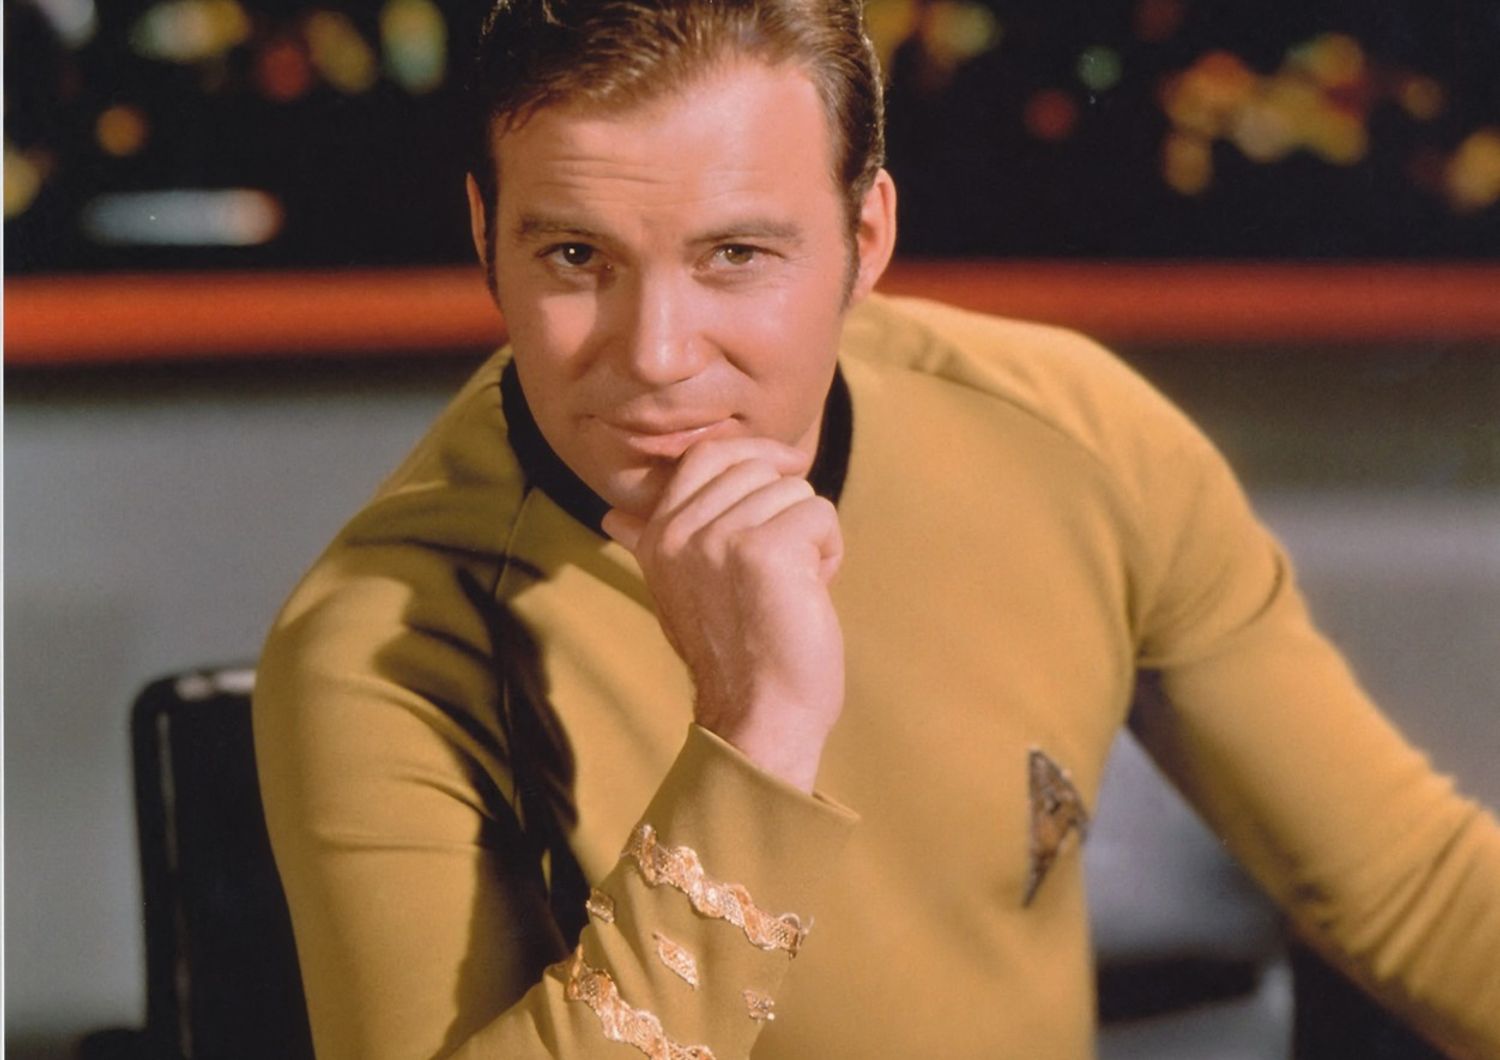 William Shatner nei panni del Capitano Kirk di Star Trek